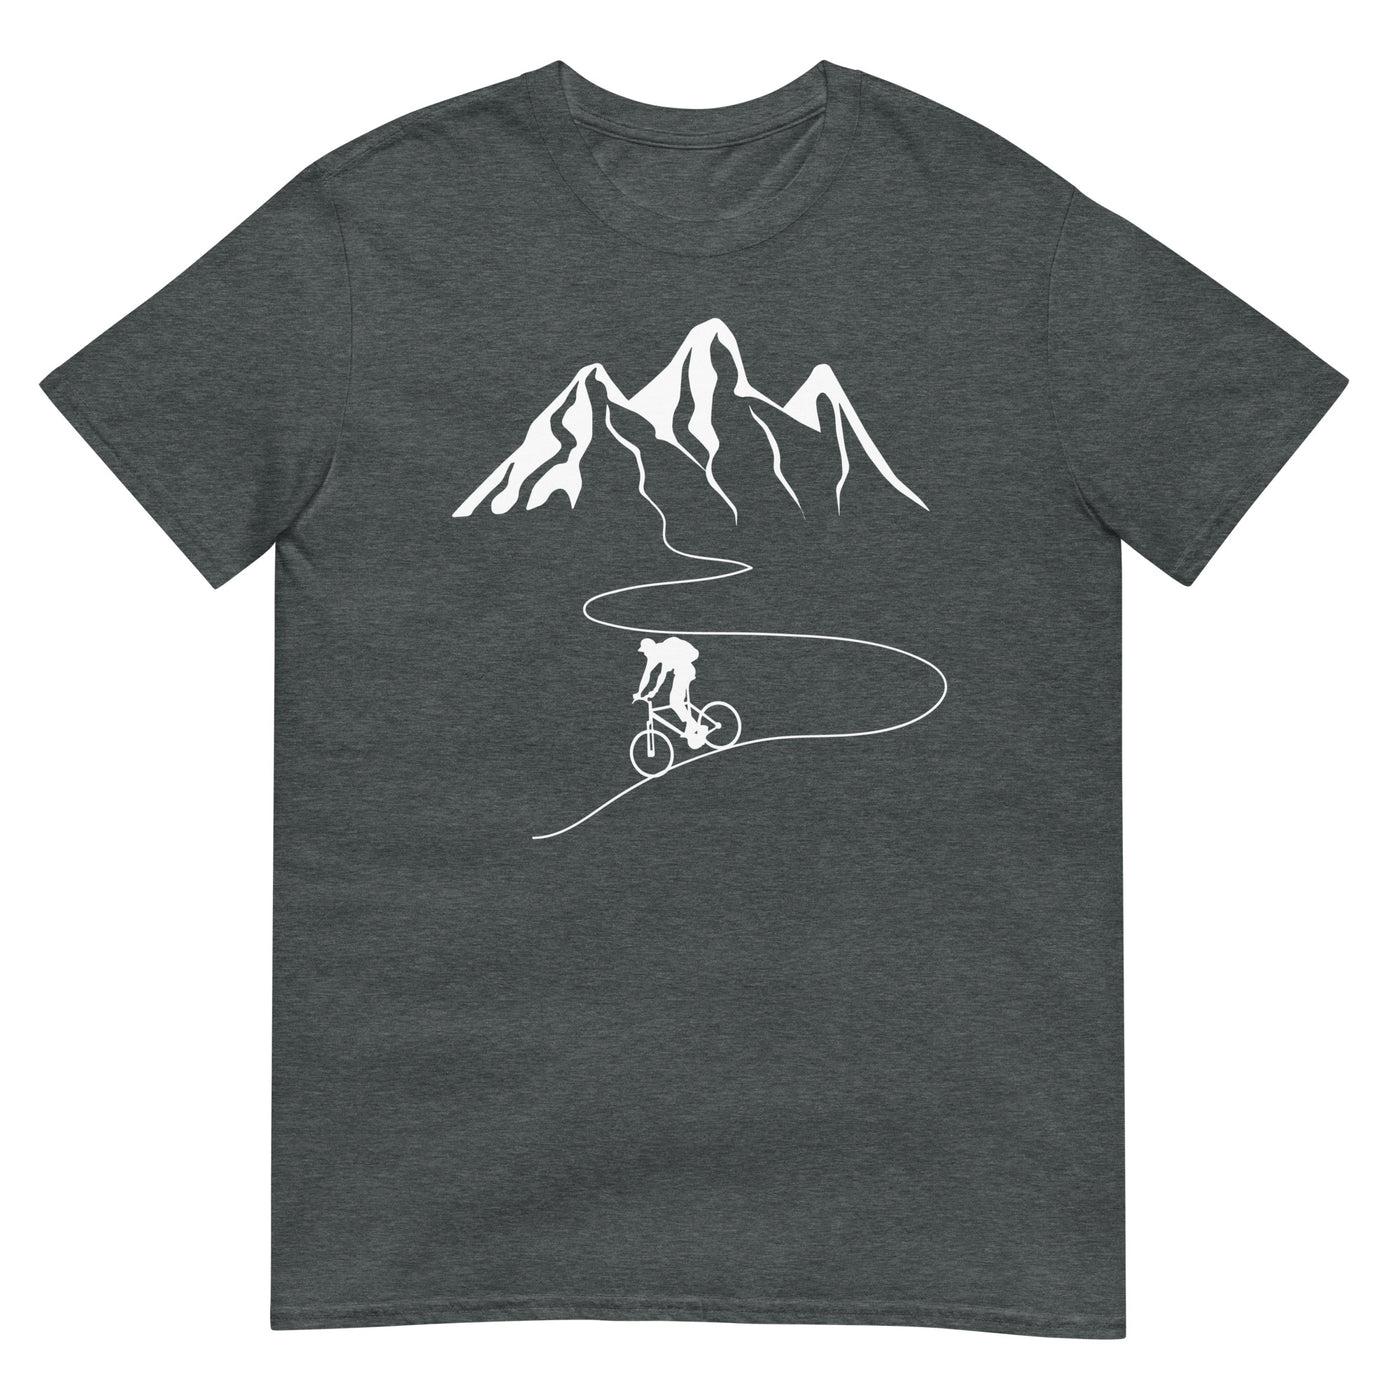 Berge - Kurve Linie - Radfahren - T-Shirt (Unisex) fahrrad xxx yyy zzz Dark Heather